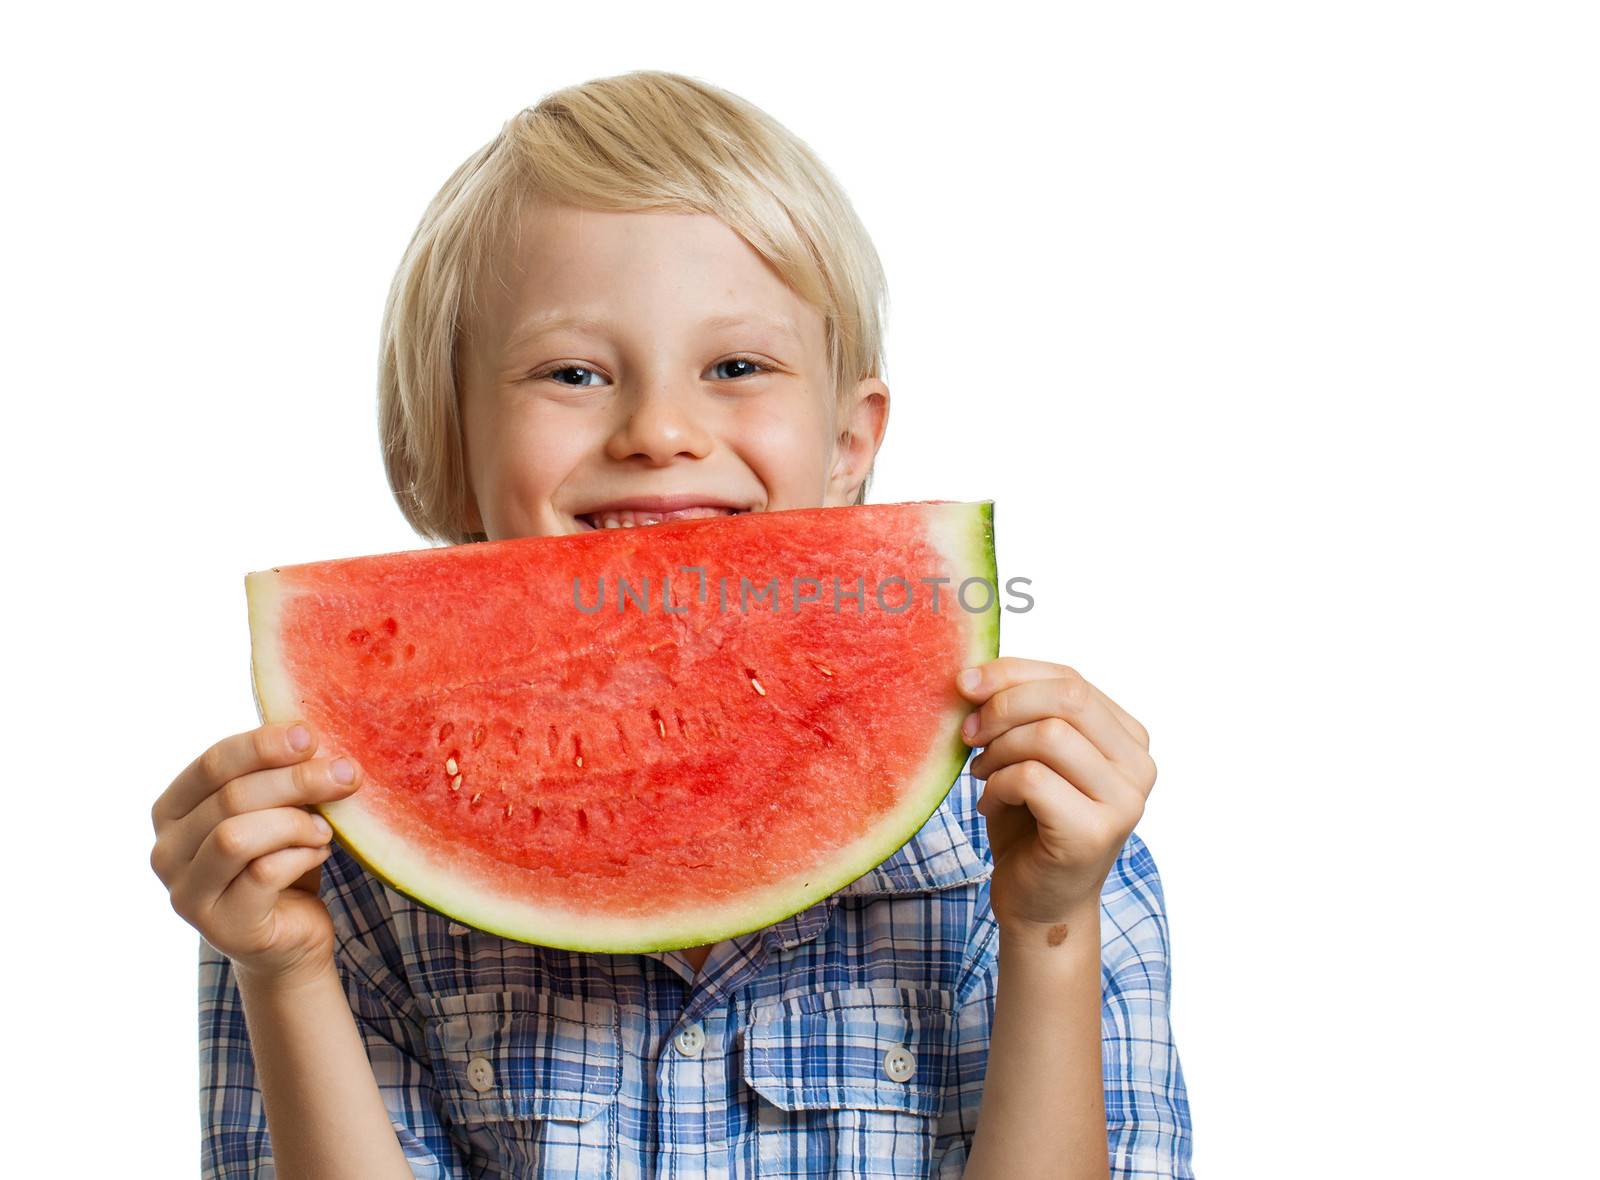 Cute boy smiling behind water melon by Jaykayl